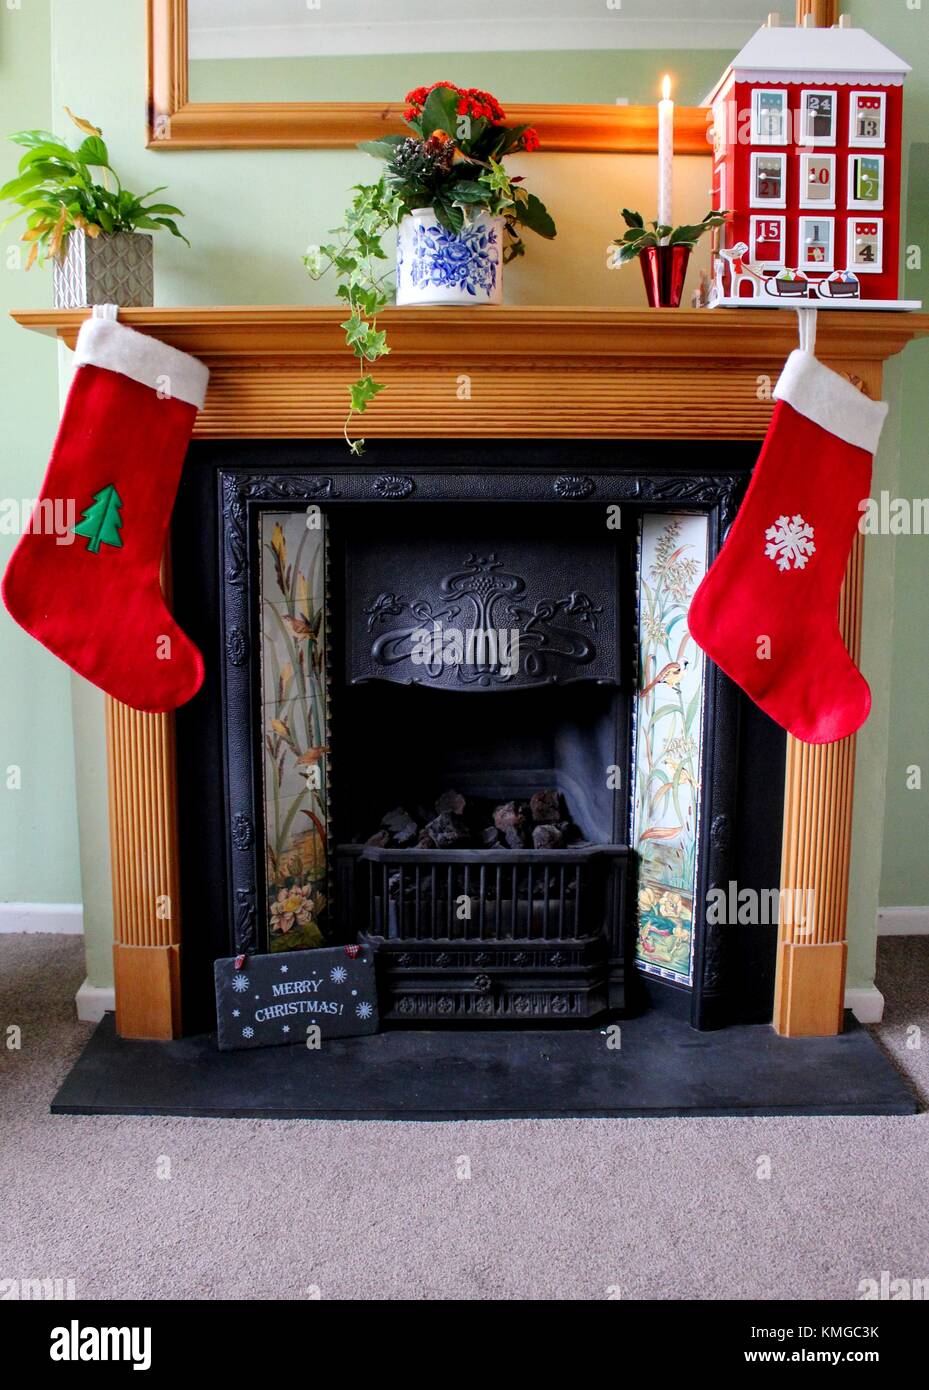 A Christmas fireplace. Stock Photo